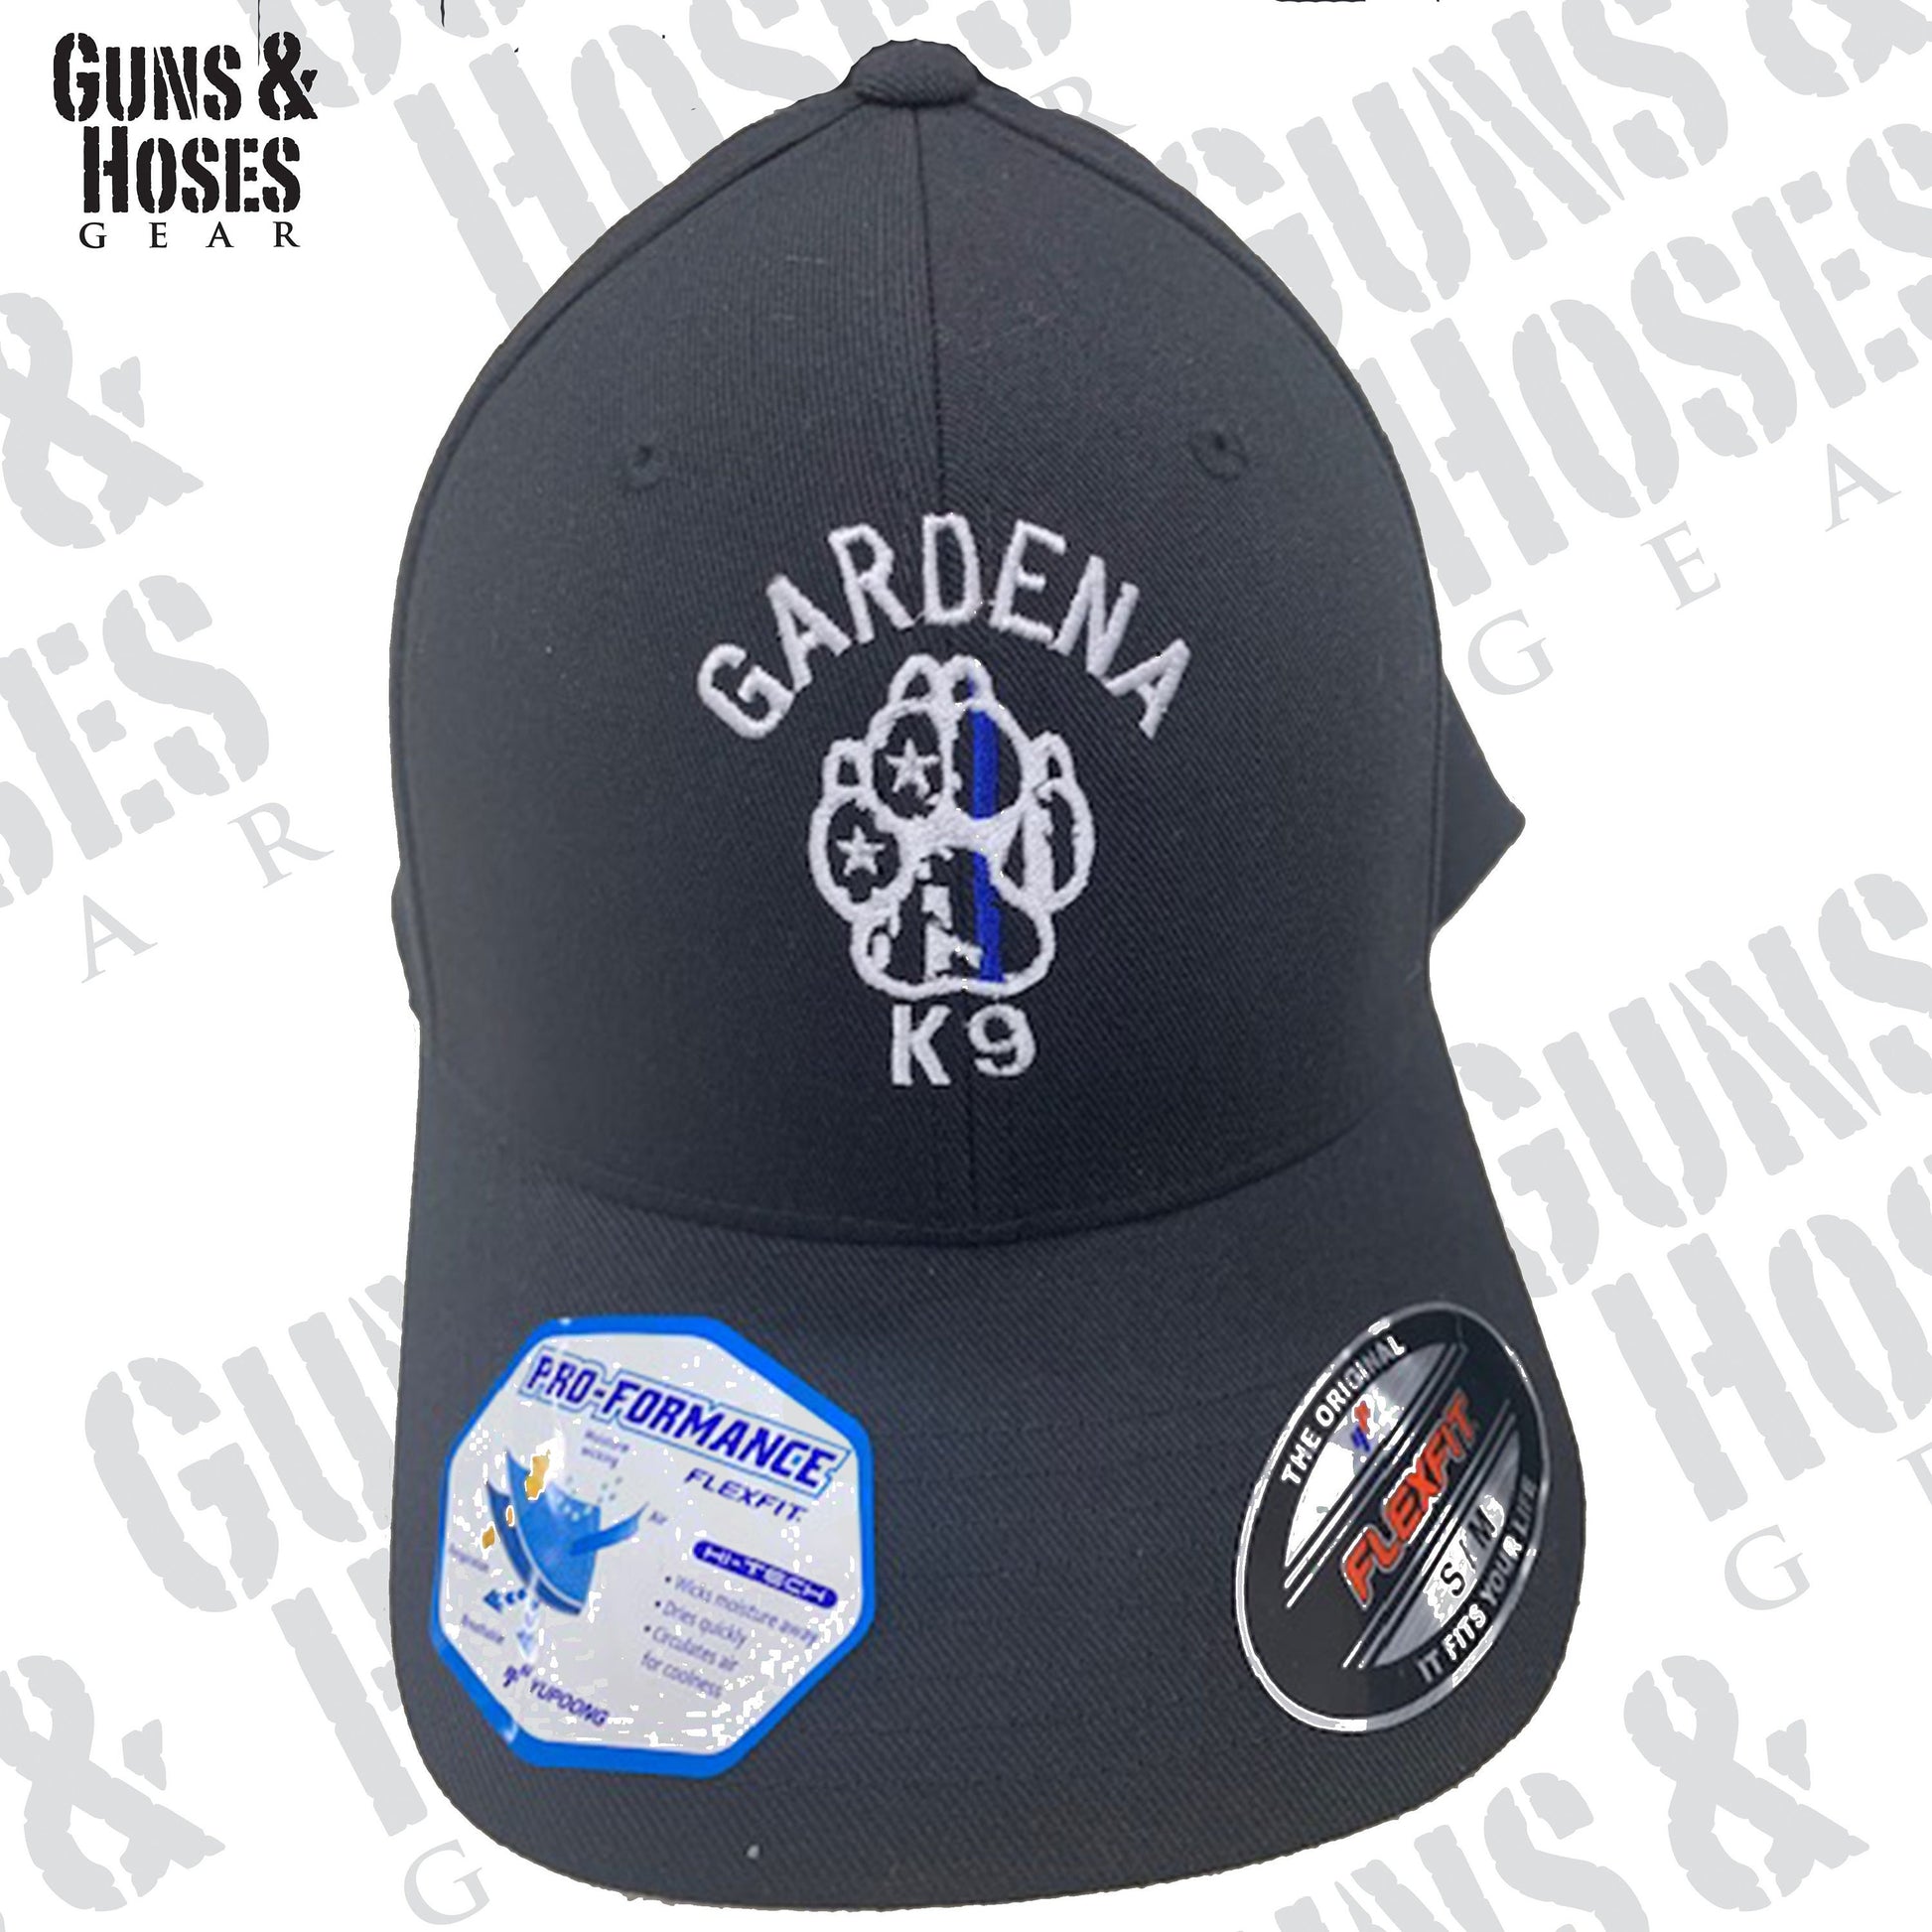 Gardena PD K9 Embroidered Hat, Gardena Police K9, Gardena Police Hat, Official K9 Hat